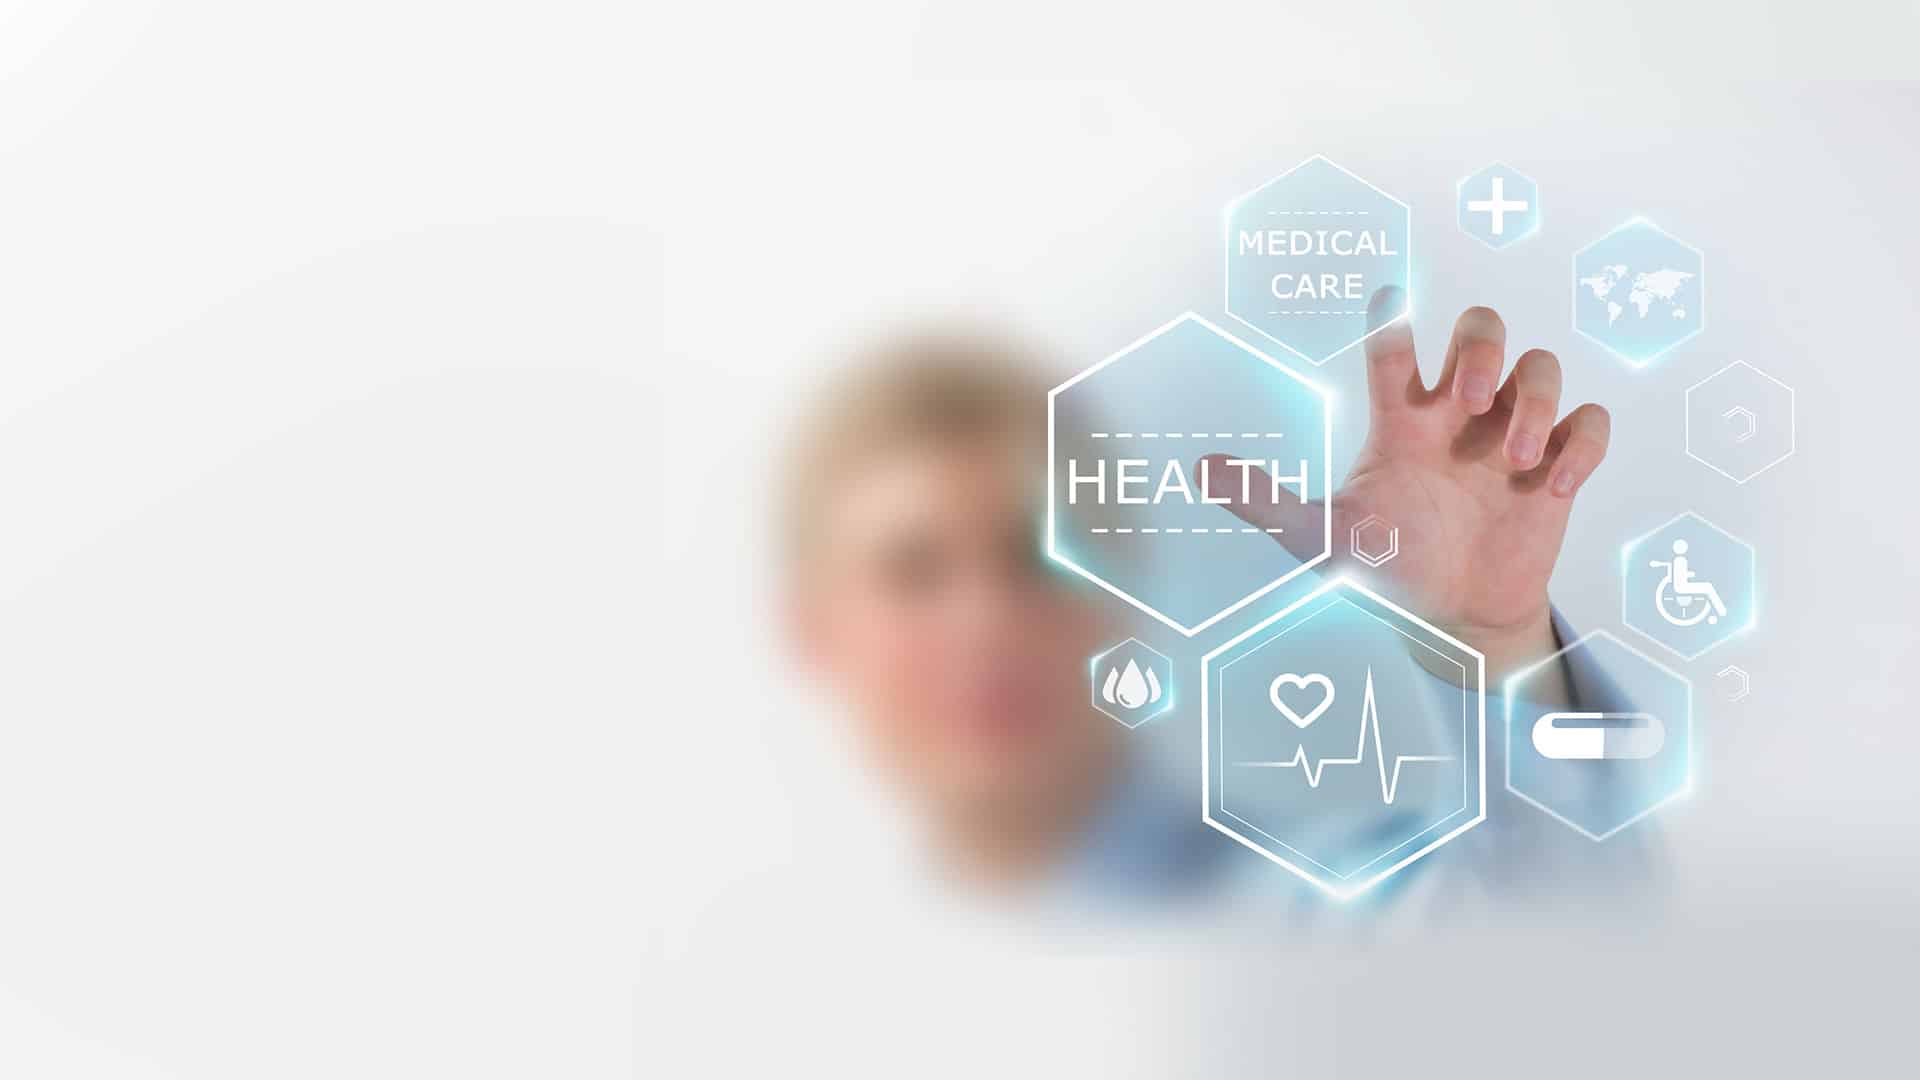 Health screening using advanced technology